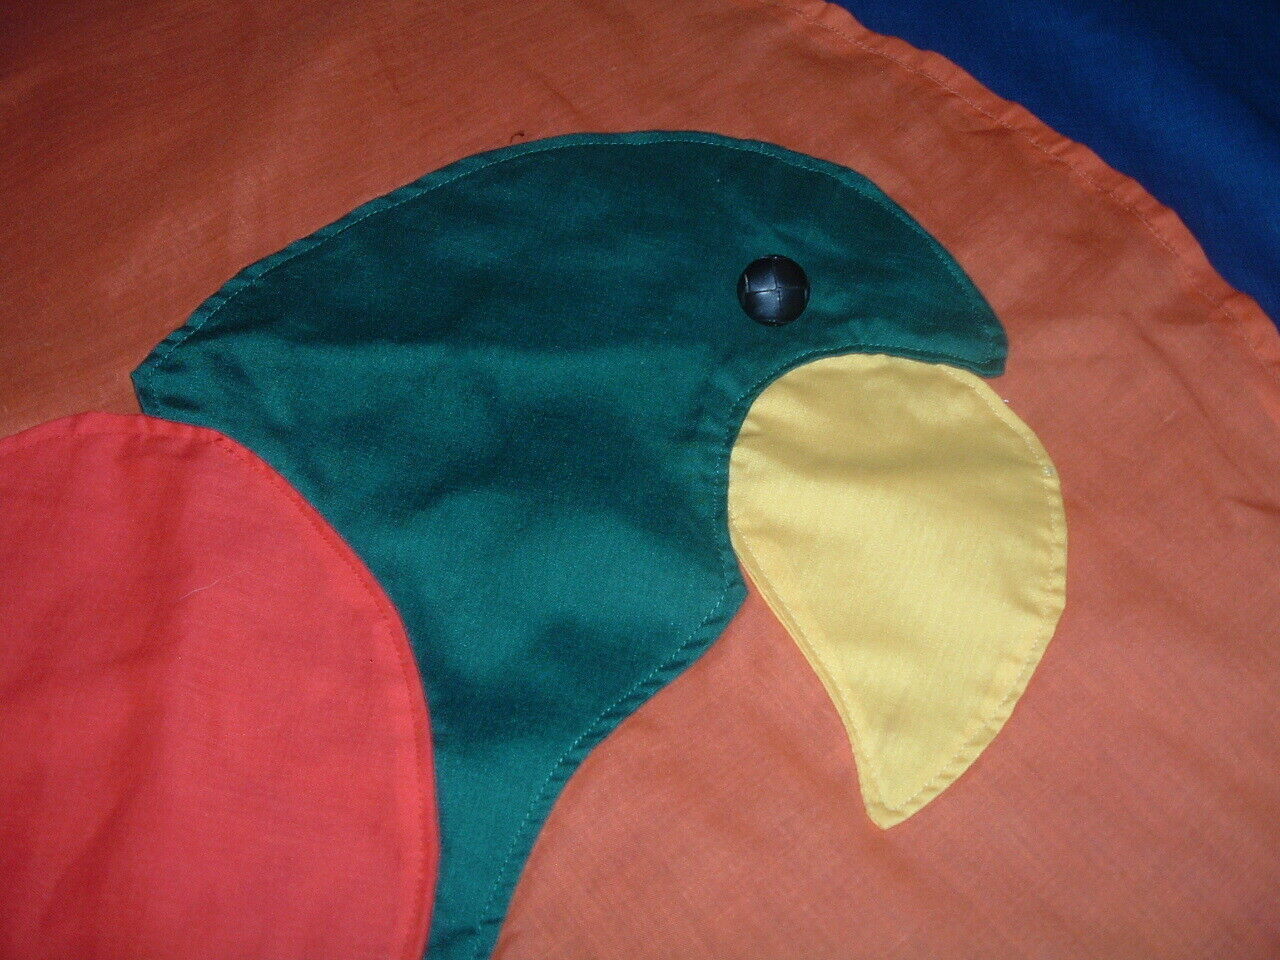 Vtg 80s Parrot Handmade Wall Hanging or Door Banner Flag Decor 40x54 #PB6